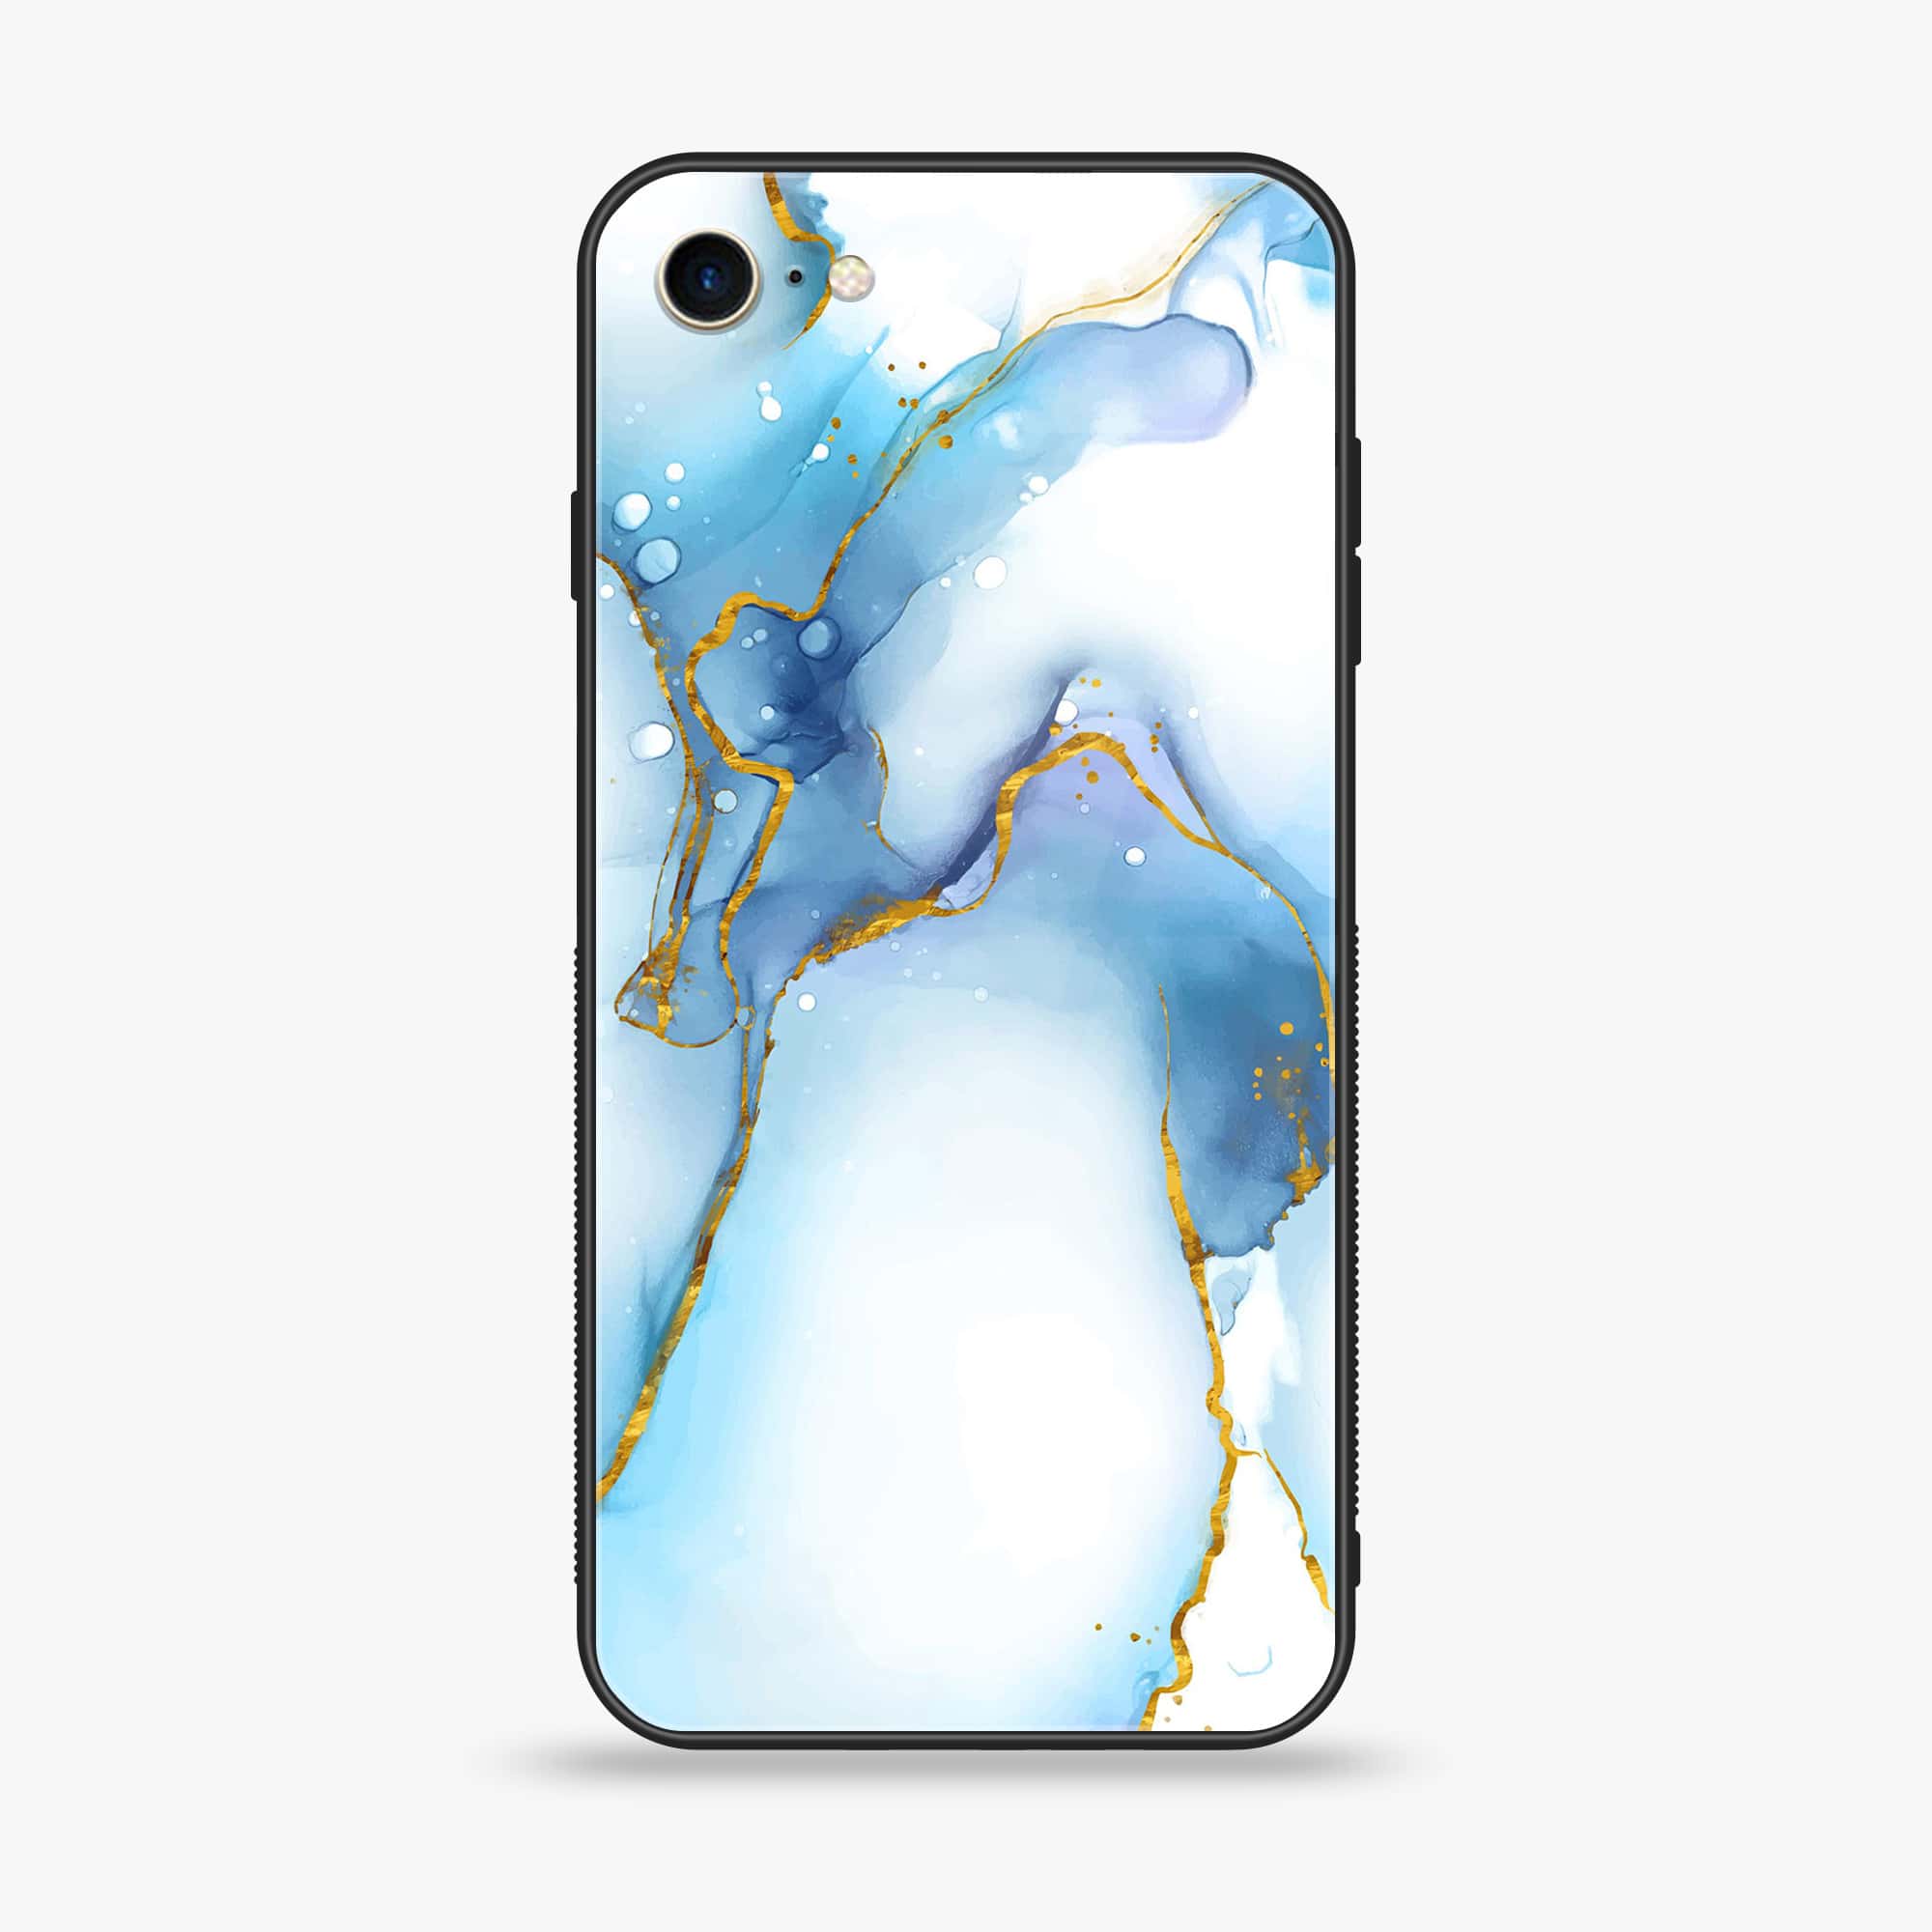 IPhone SE 2020 - Blue Marble Series V 2.0 - Premium Printed Glass soft Bumper shock Proof Case